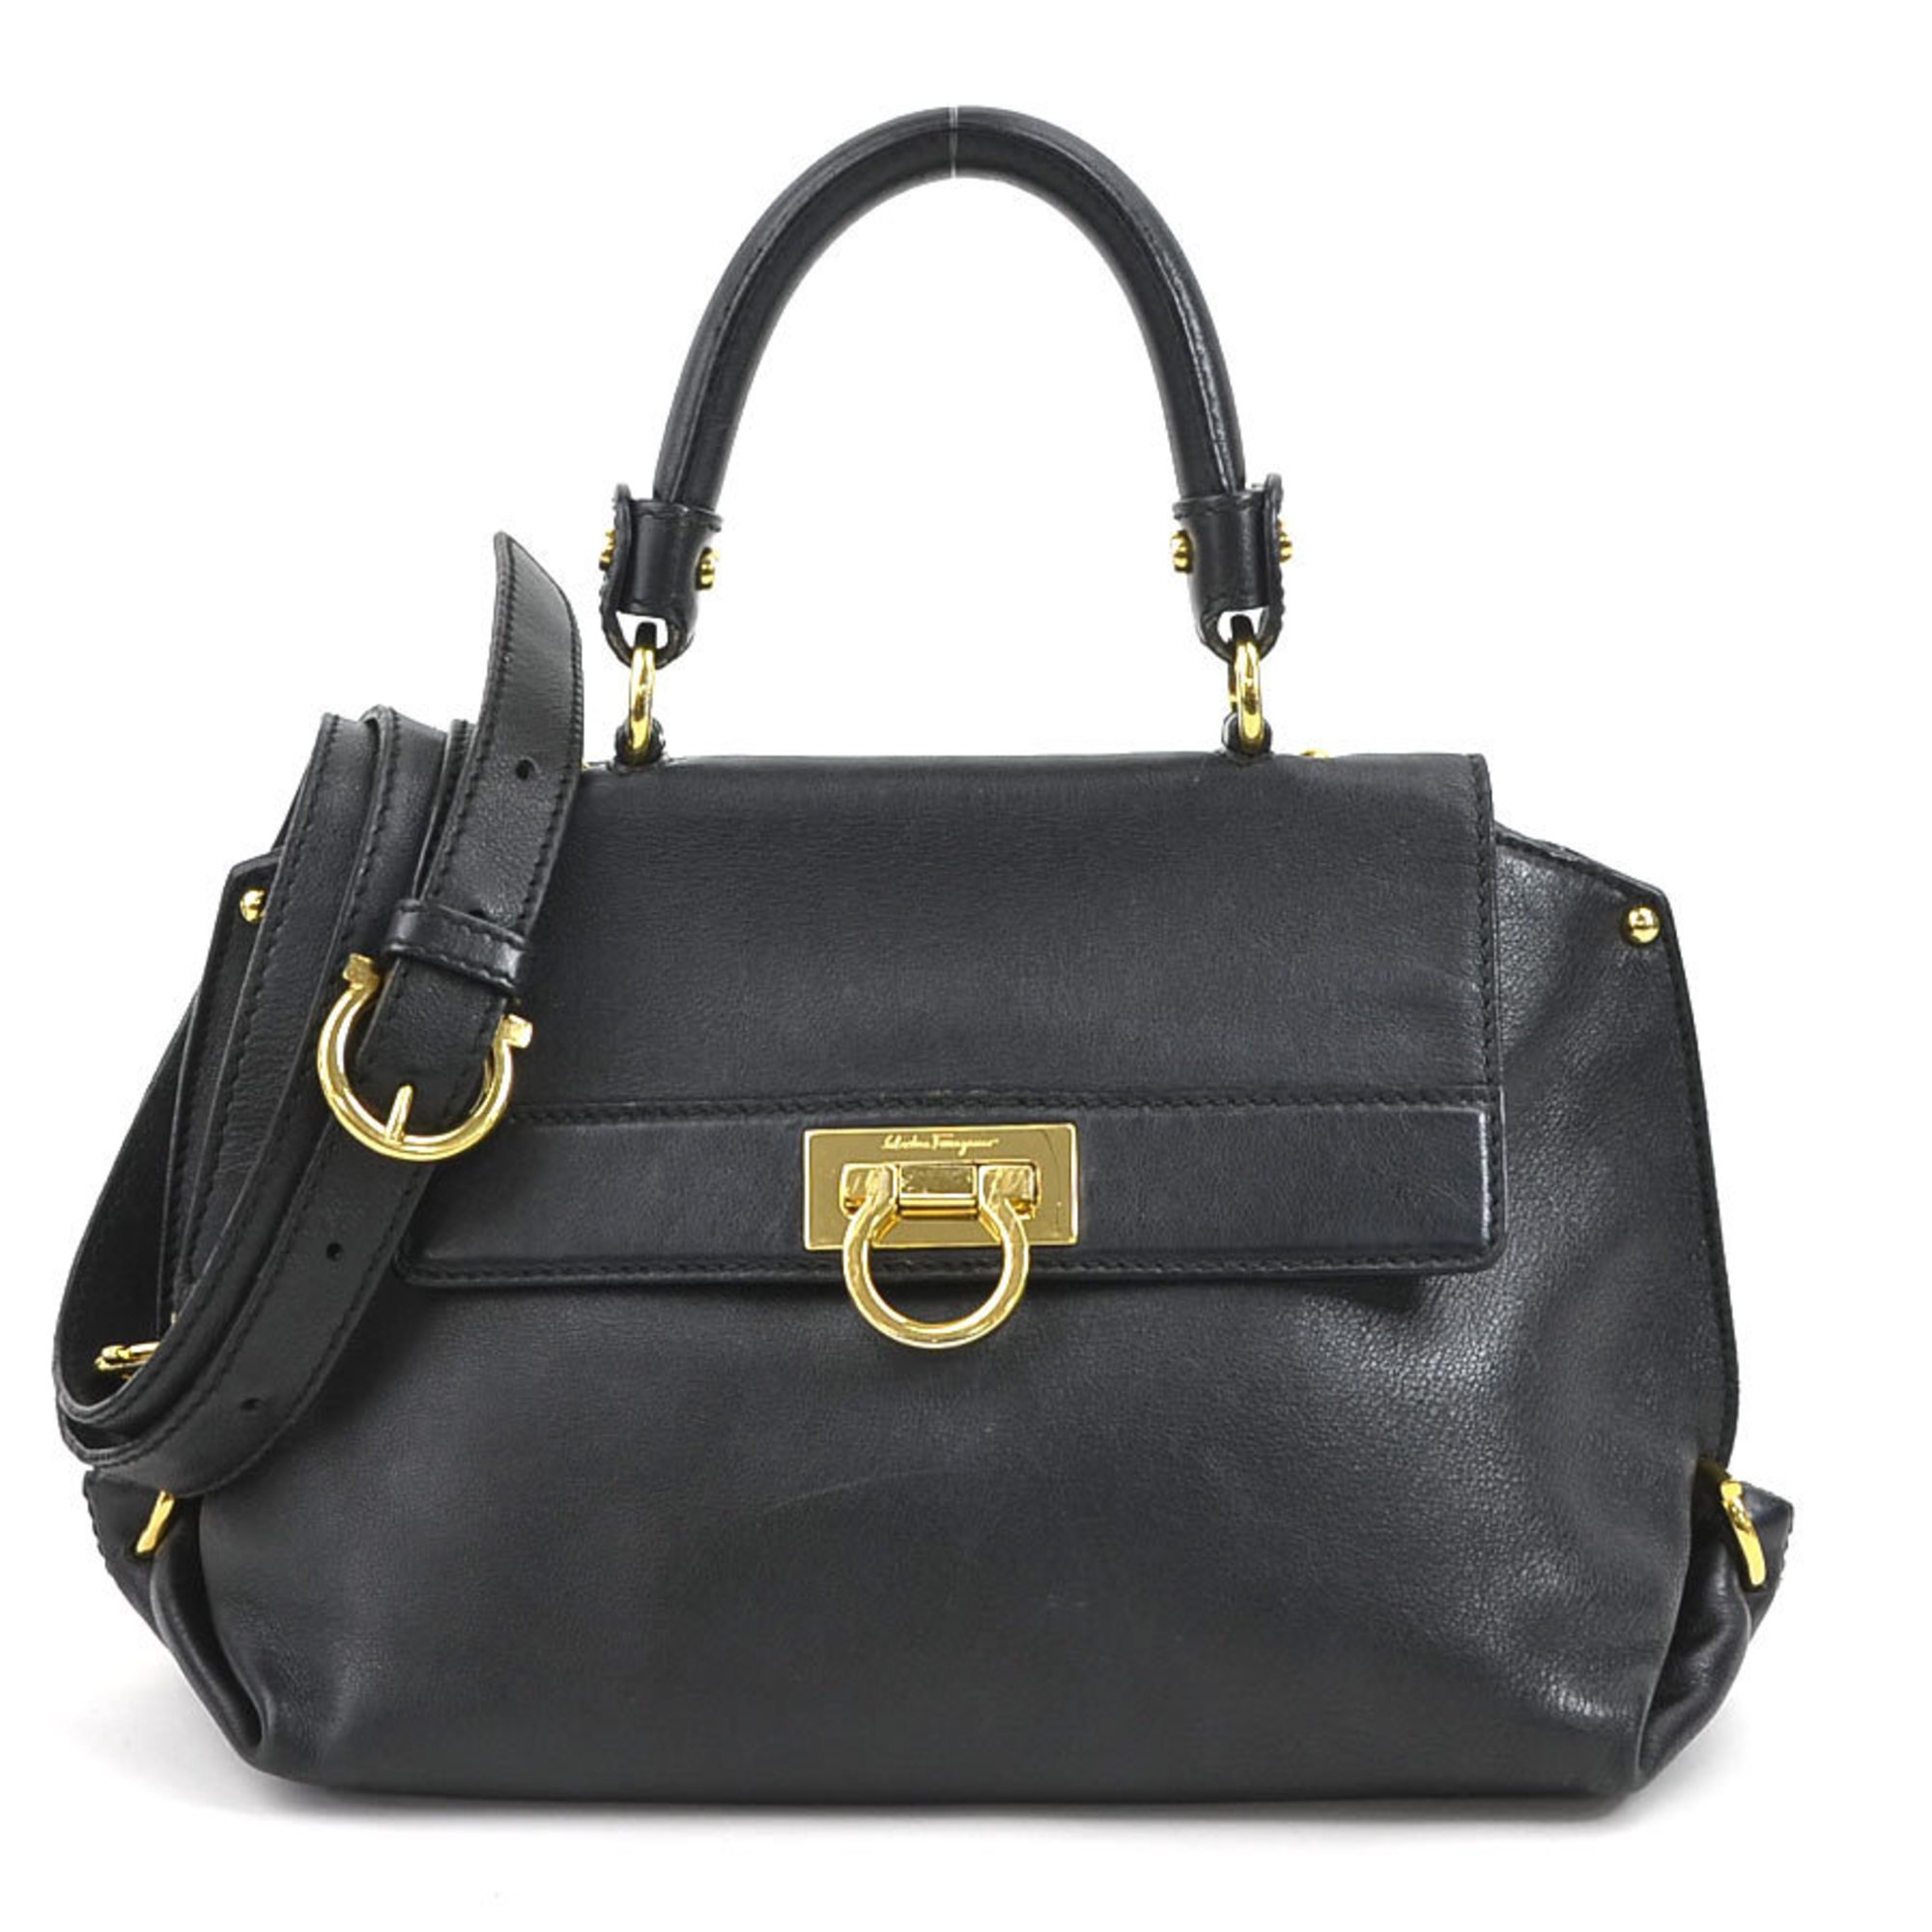 Salvatore Ferragamo Handbag Shoulder Bag Gancini Leather Black Gold Women's e58764i